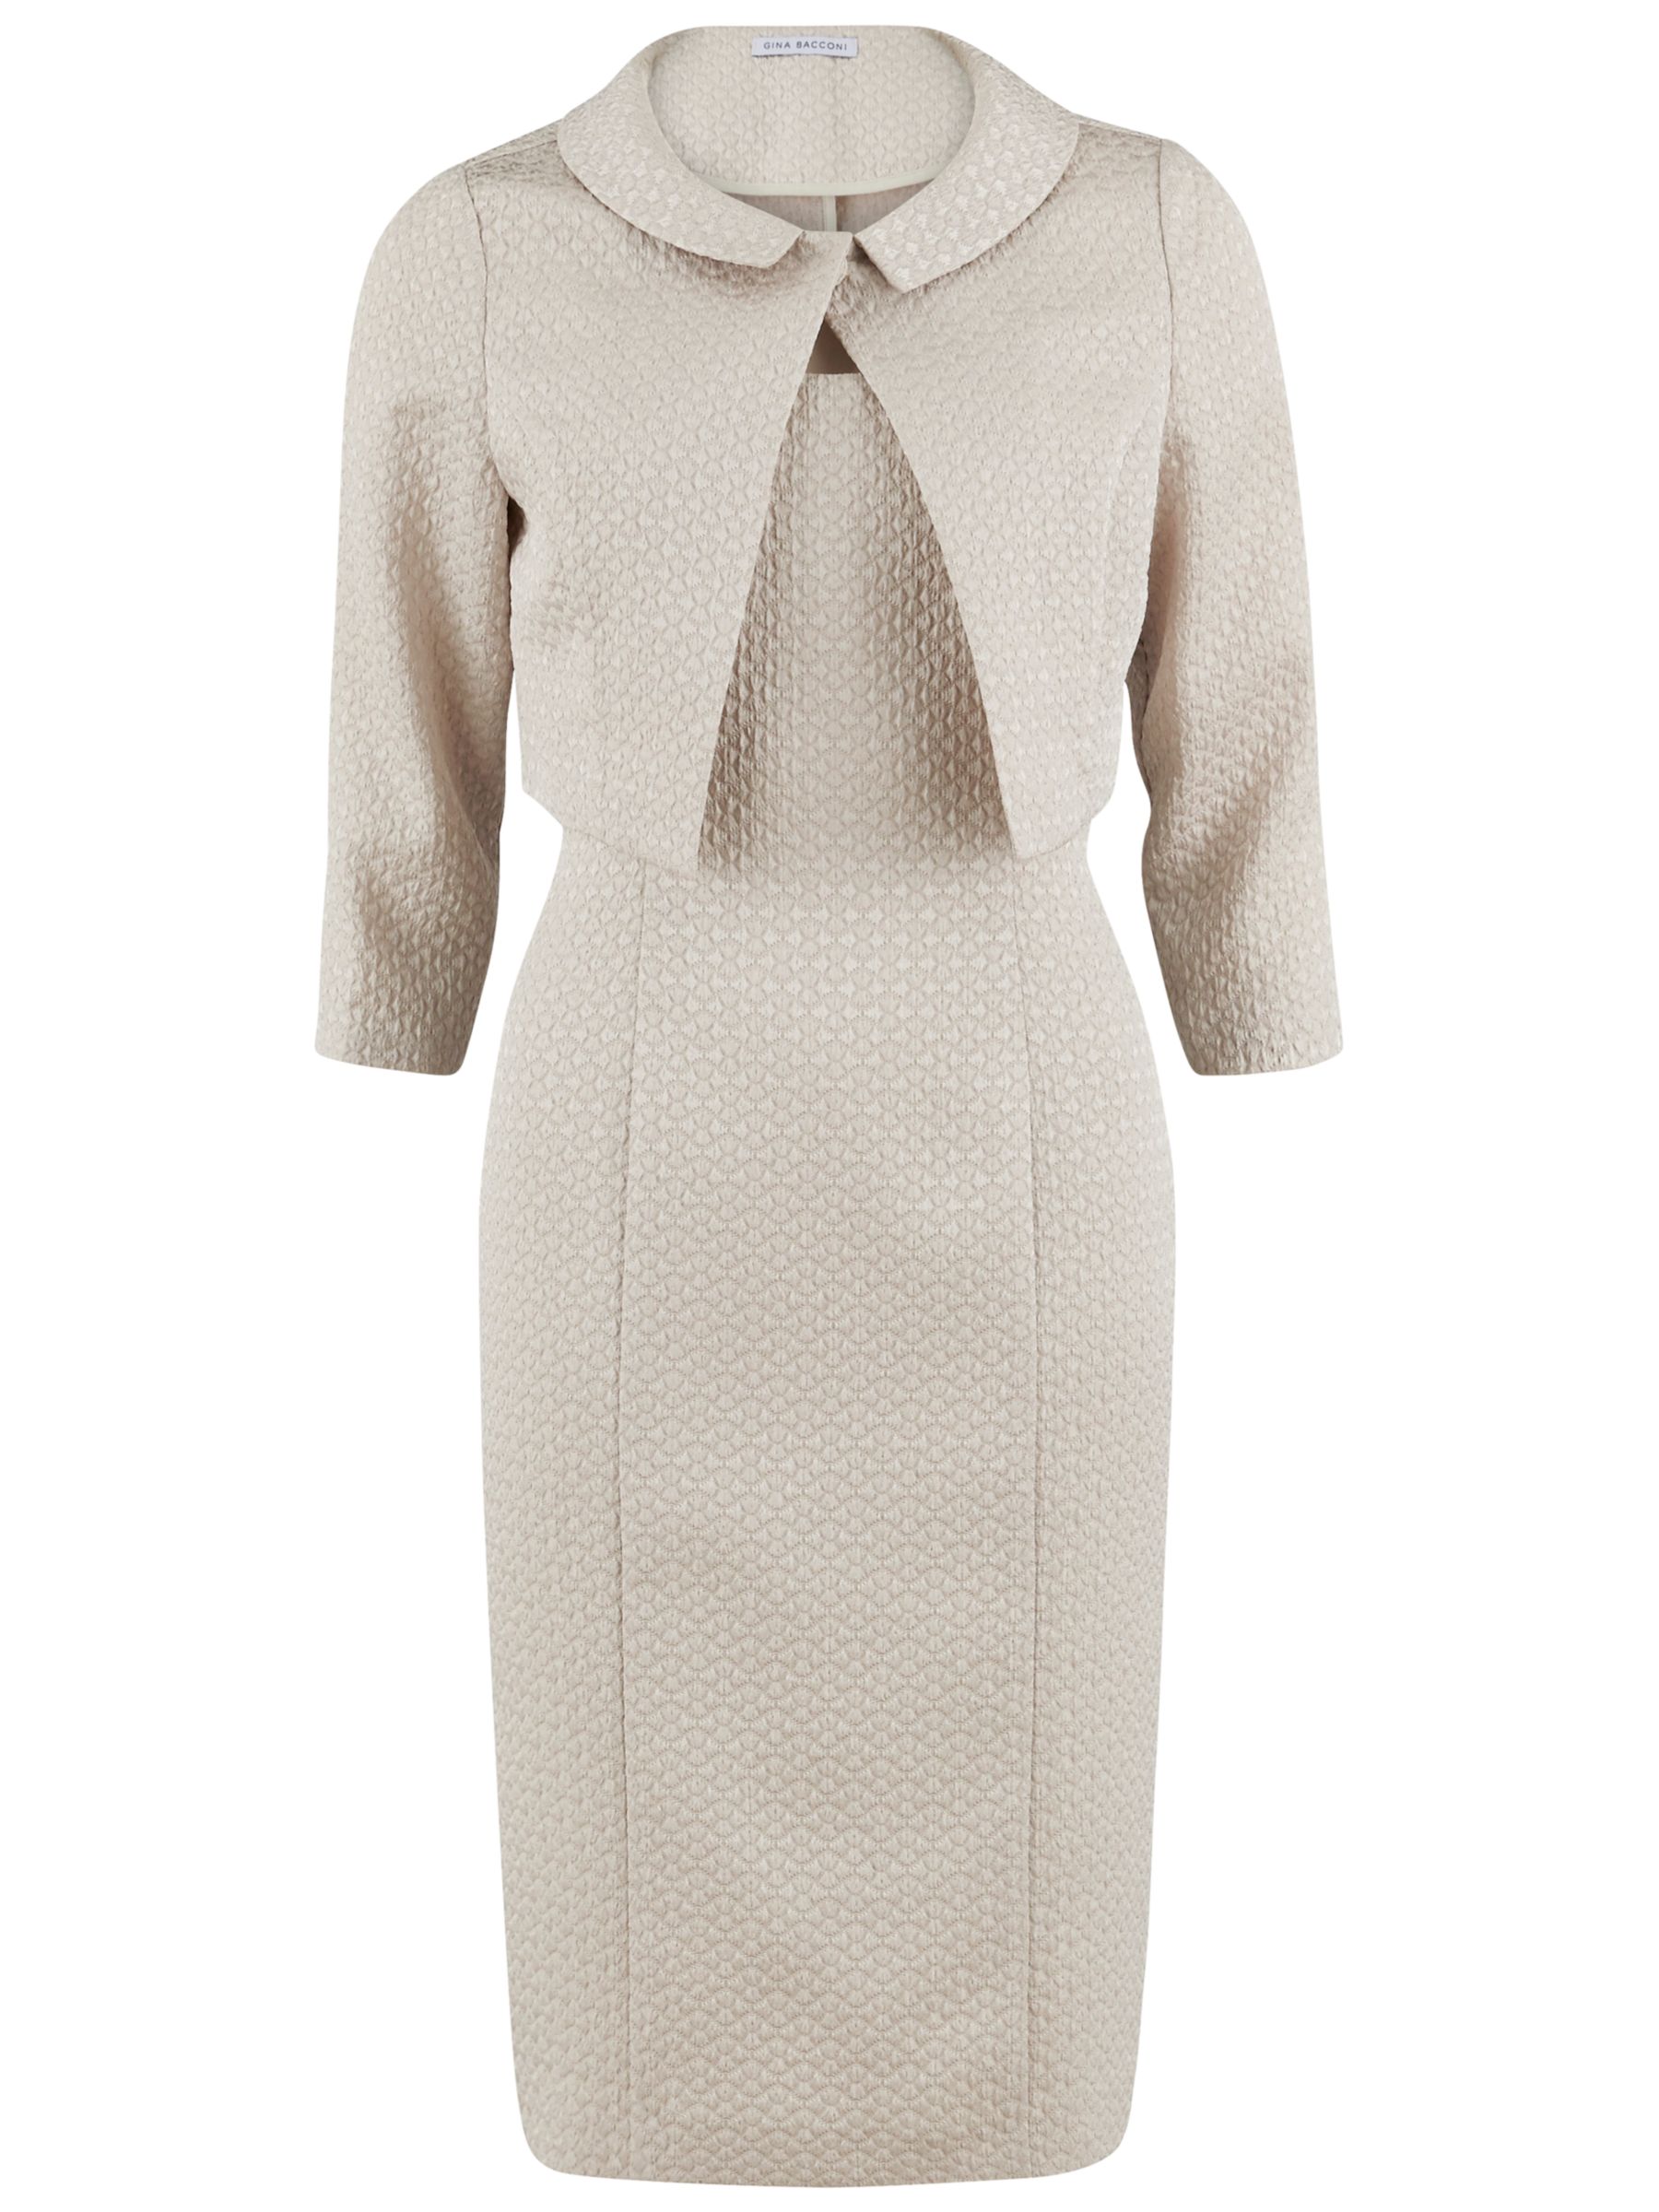 Gina Bacconi Bow Jacquard Dress And Jacket, Beige at John Lewis & Partners